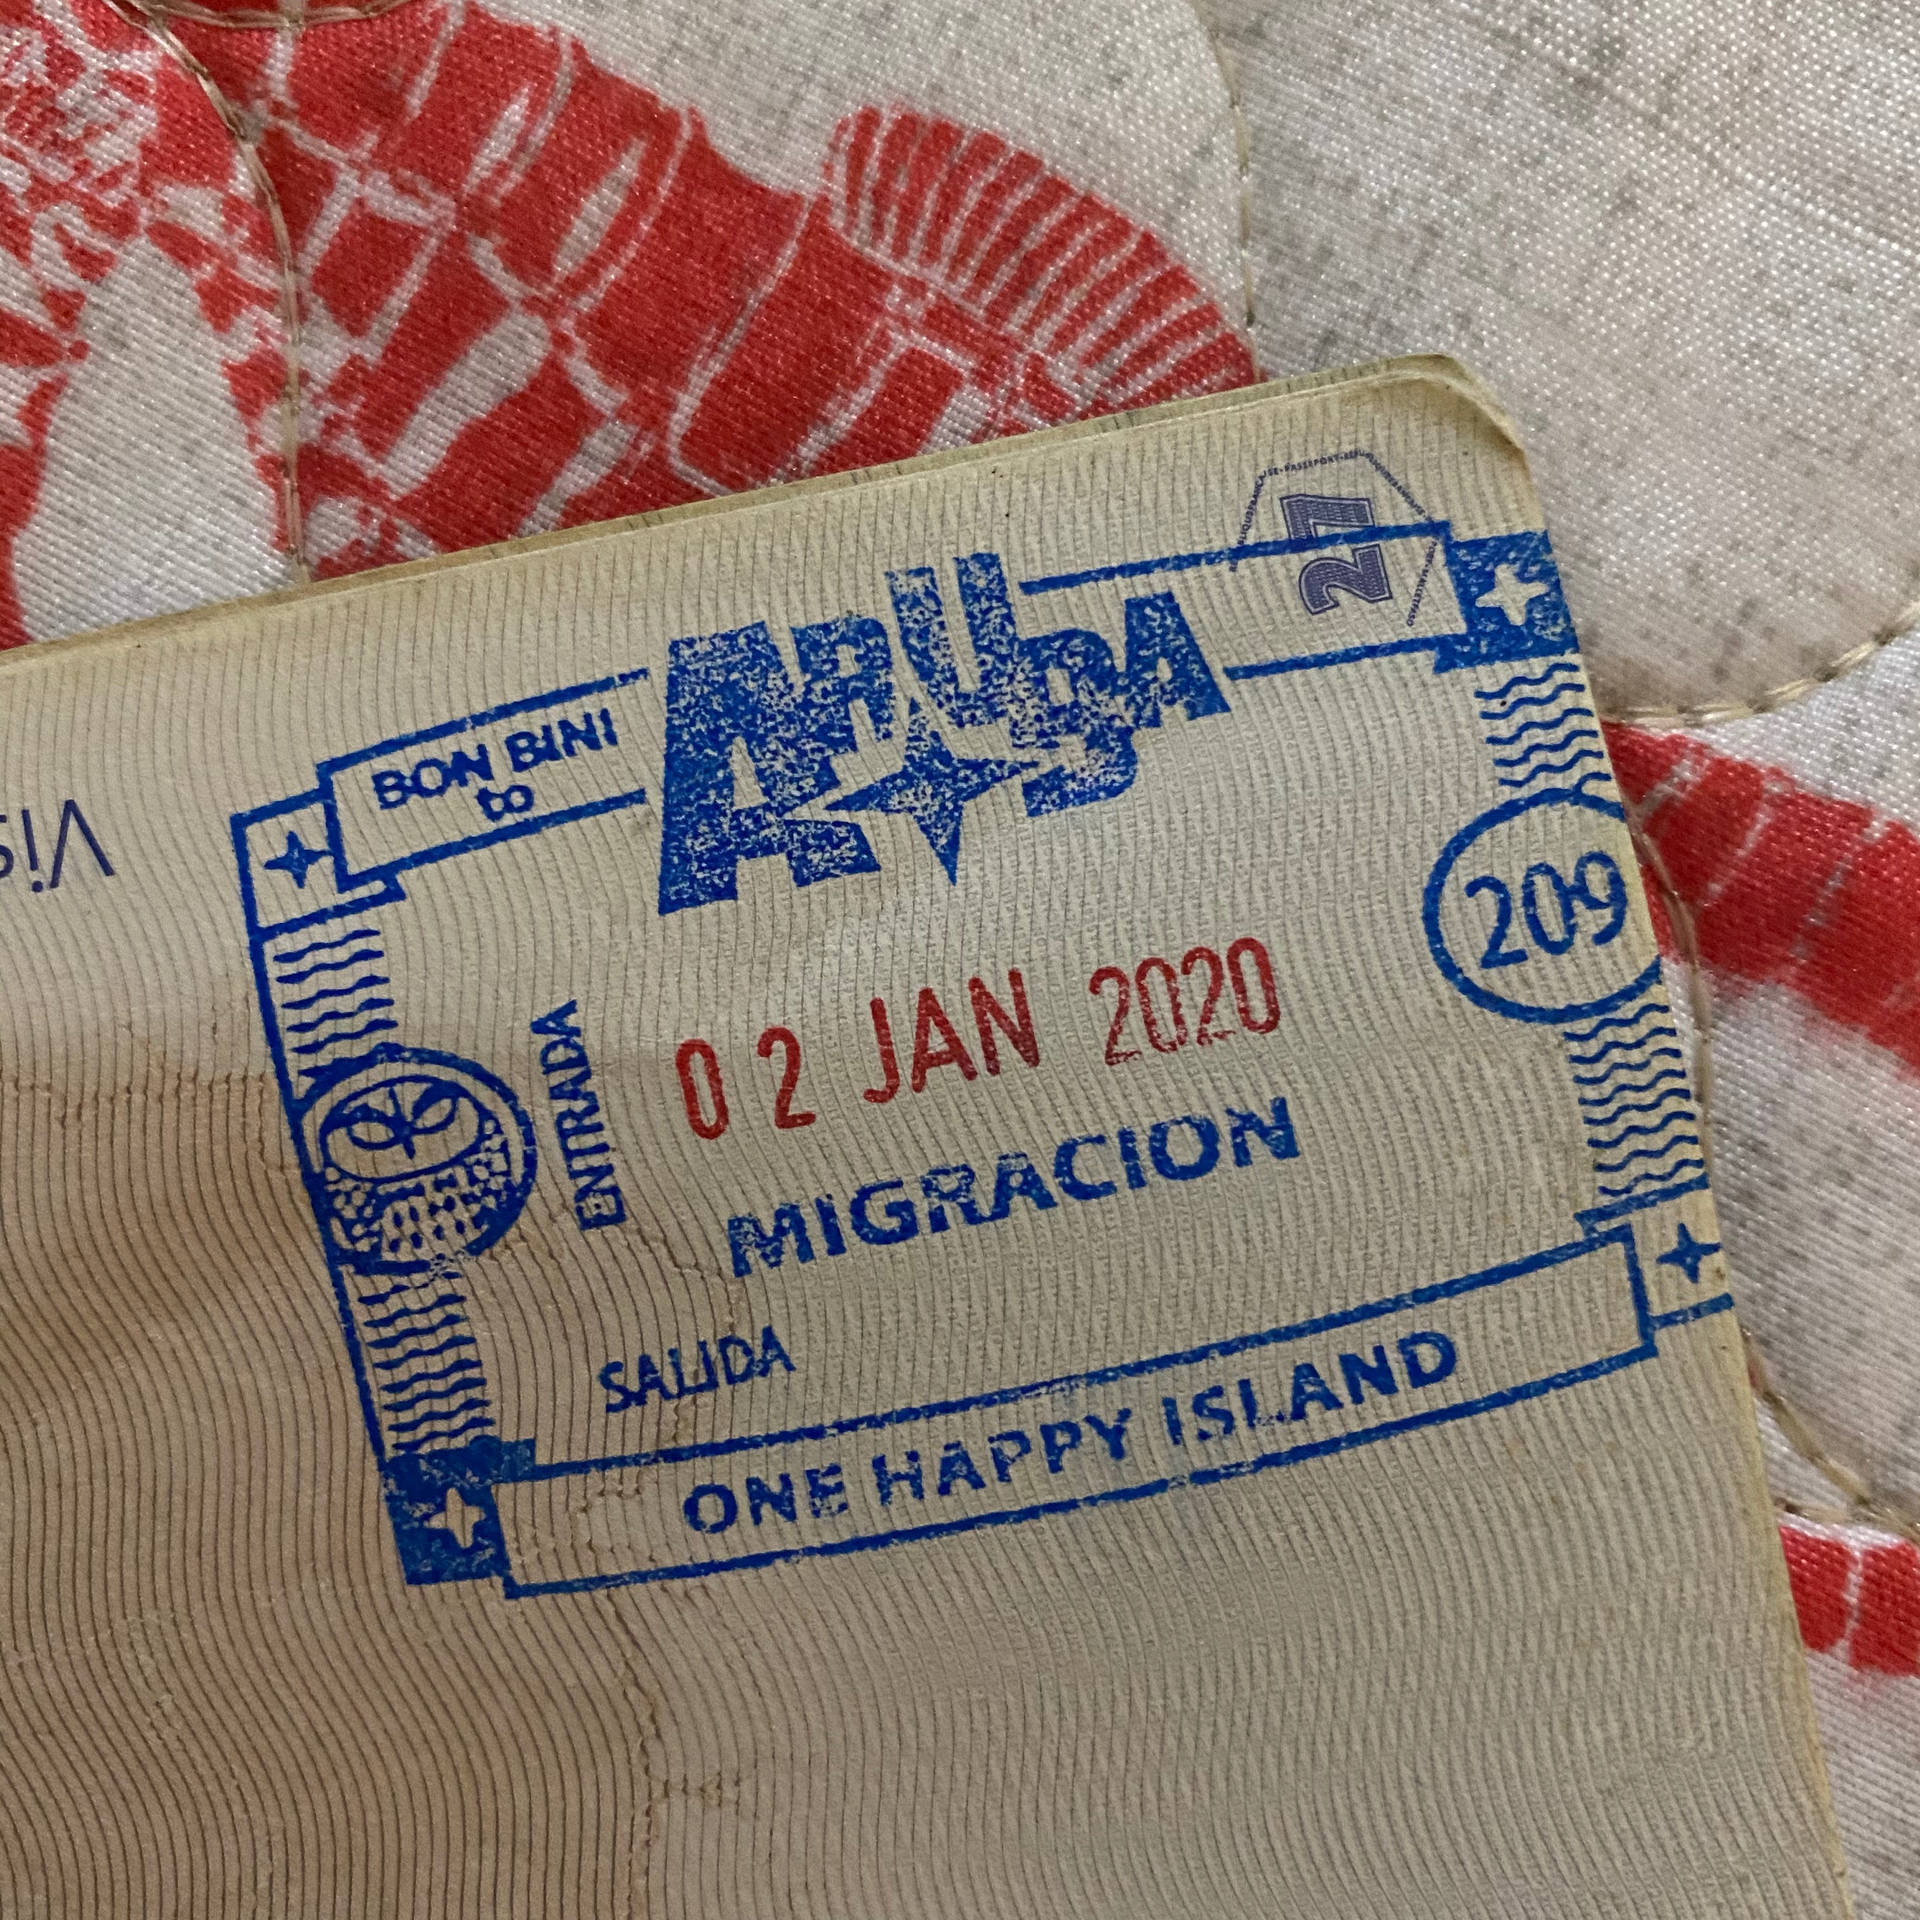 Aruba Passport Stamp